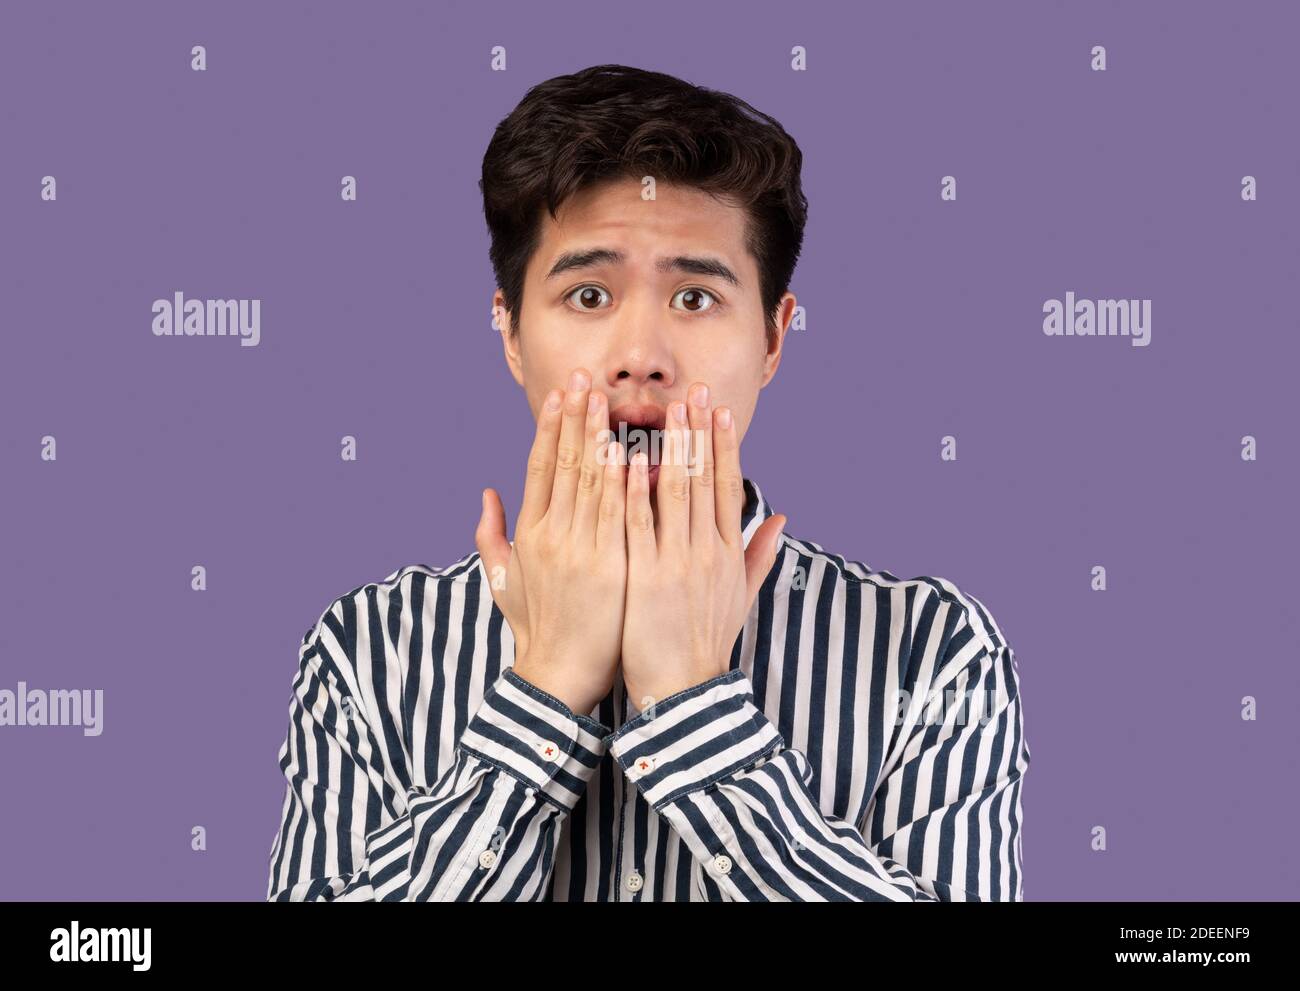 Temuto uomo asiatico grimacing, scioccato in studio viola Foto Stock